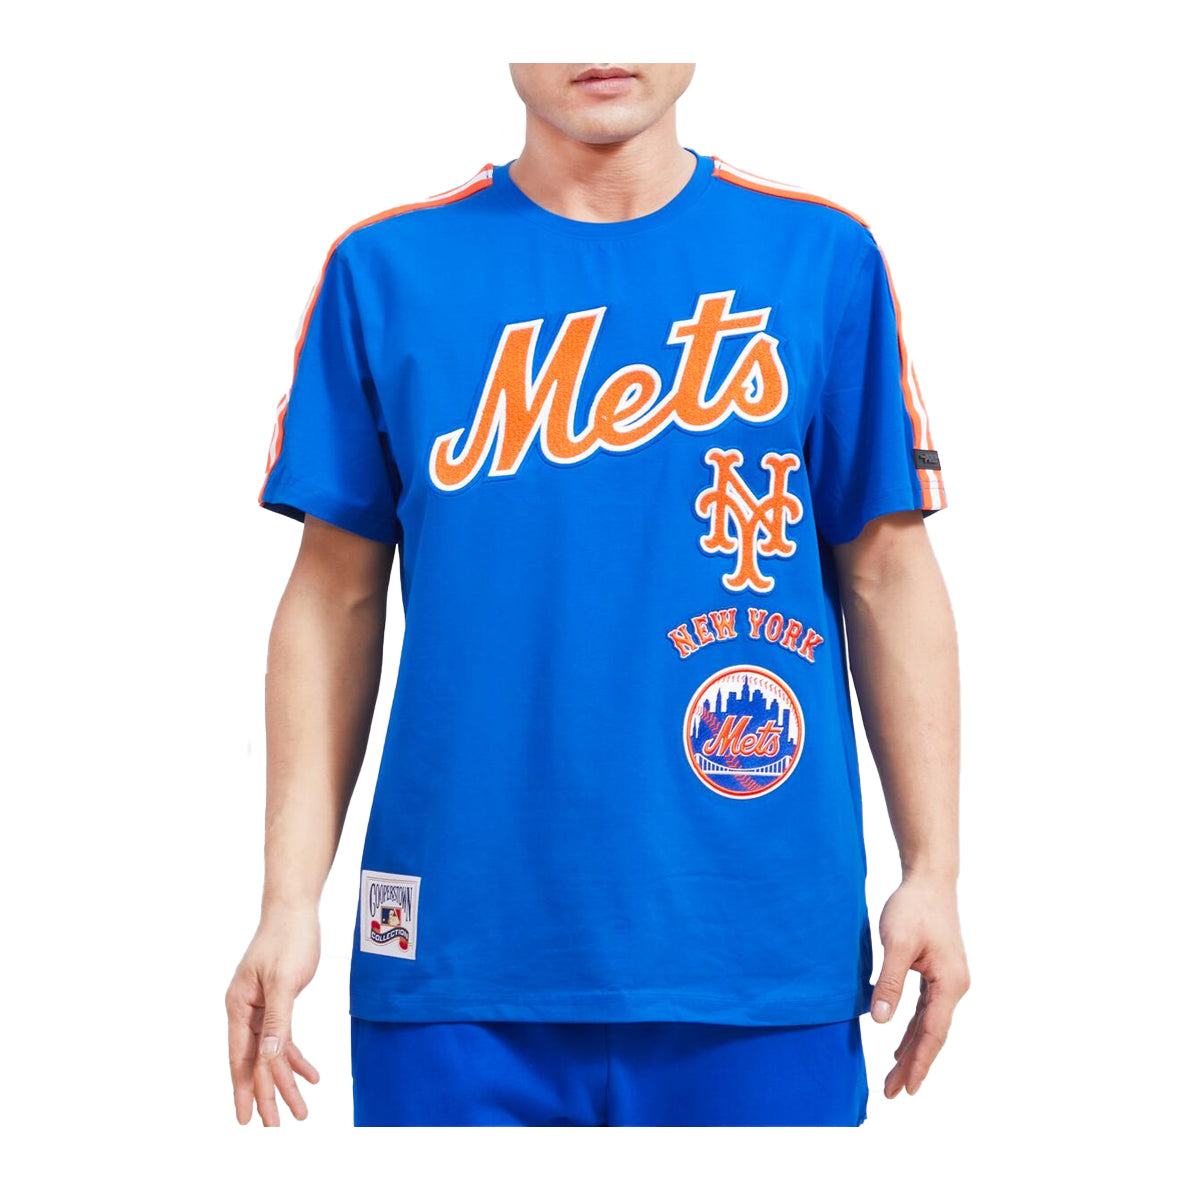 Pro Standard Mens MLB New York Mets Retro Classic Sj Striped Crew Neck T-Shirt LNM135553-RYO Royal Blue/Orange L